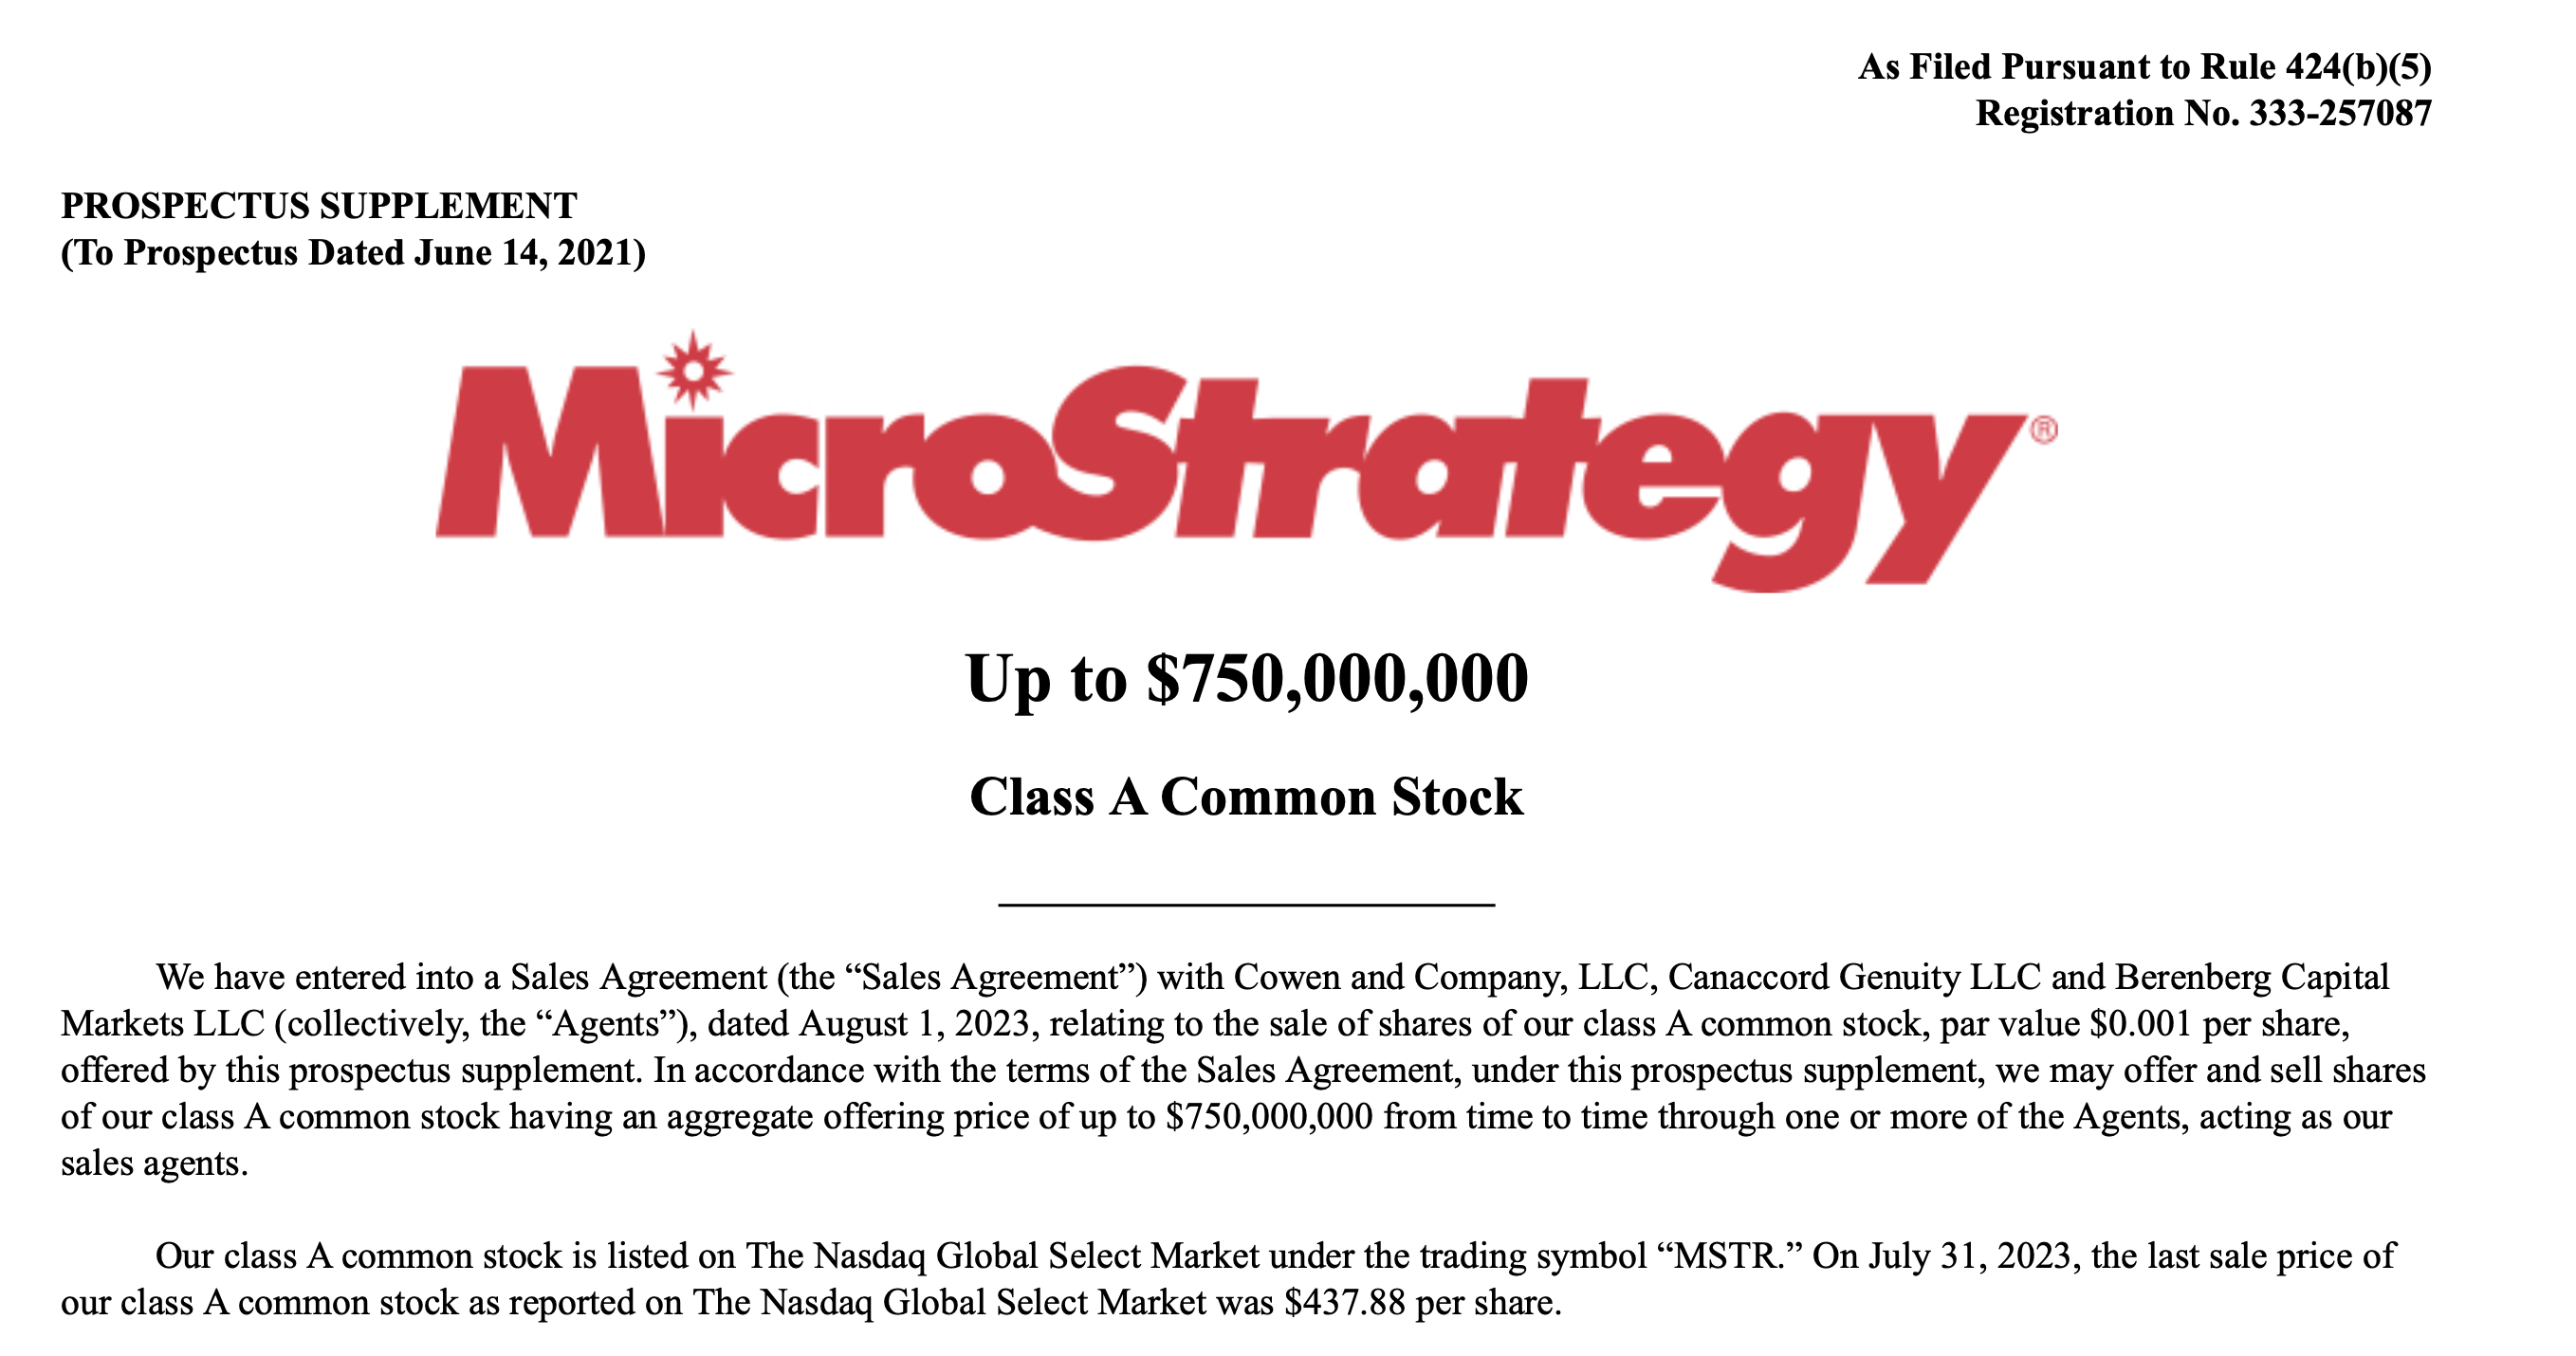 Сколько биткоинов купила MicroStrategy? Форма от MicroStrategy, поданная в Комиссию по ценным бумагам и биржам США. Фото.